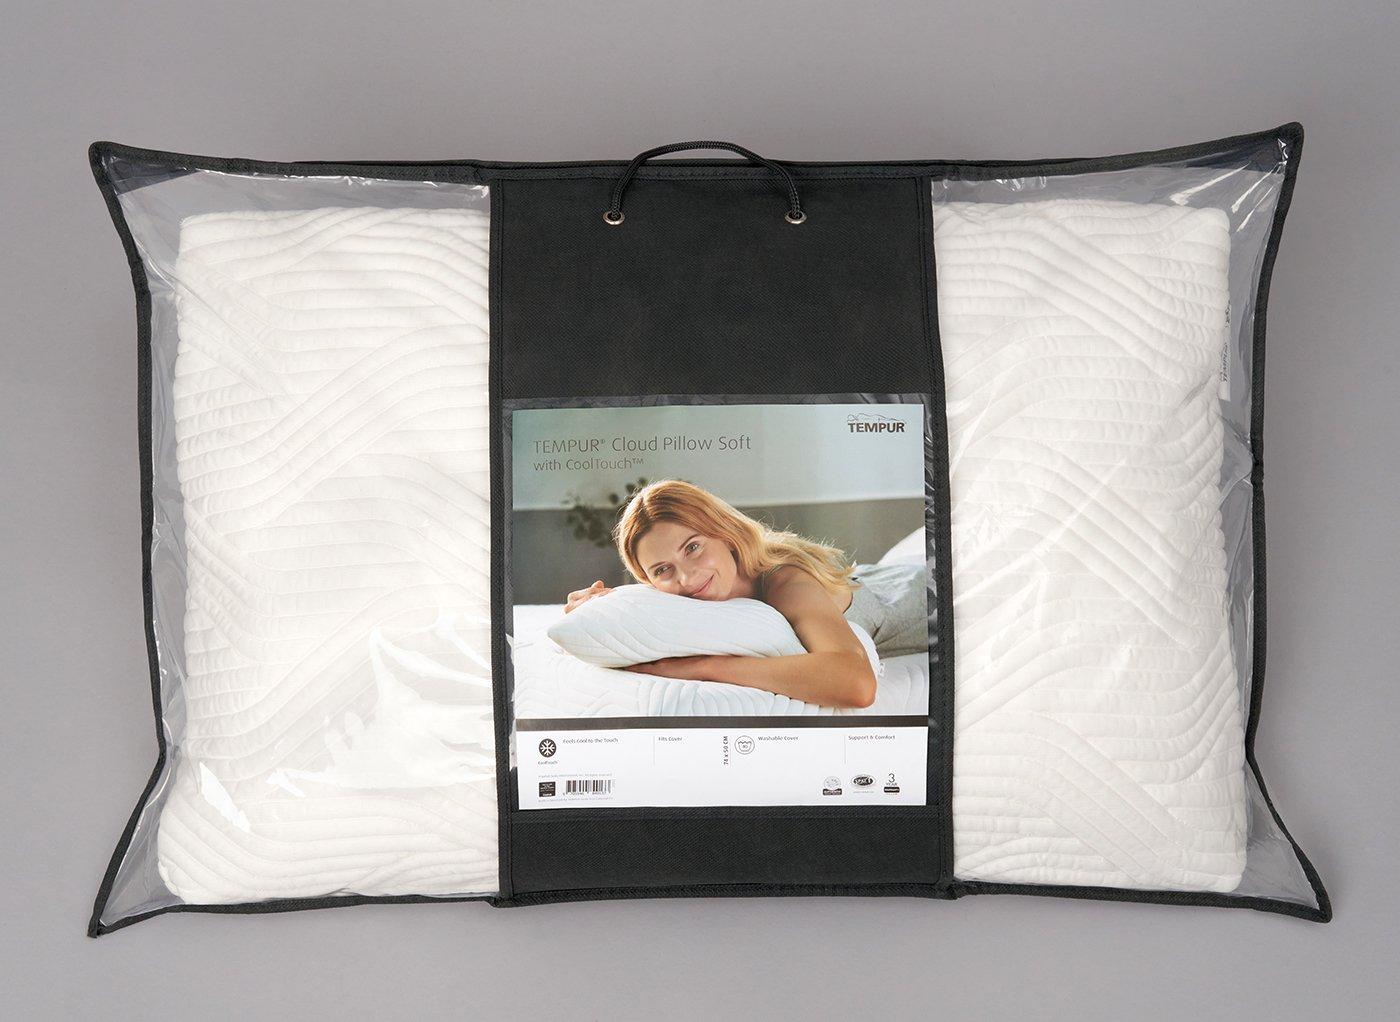 TEMPUR Cloud CoolTouch™ Pillow